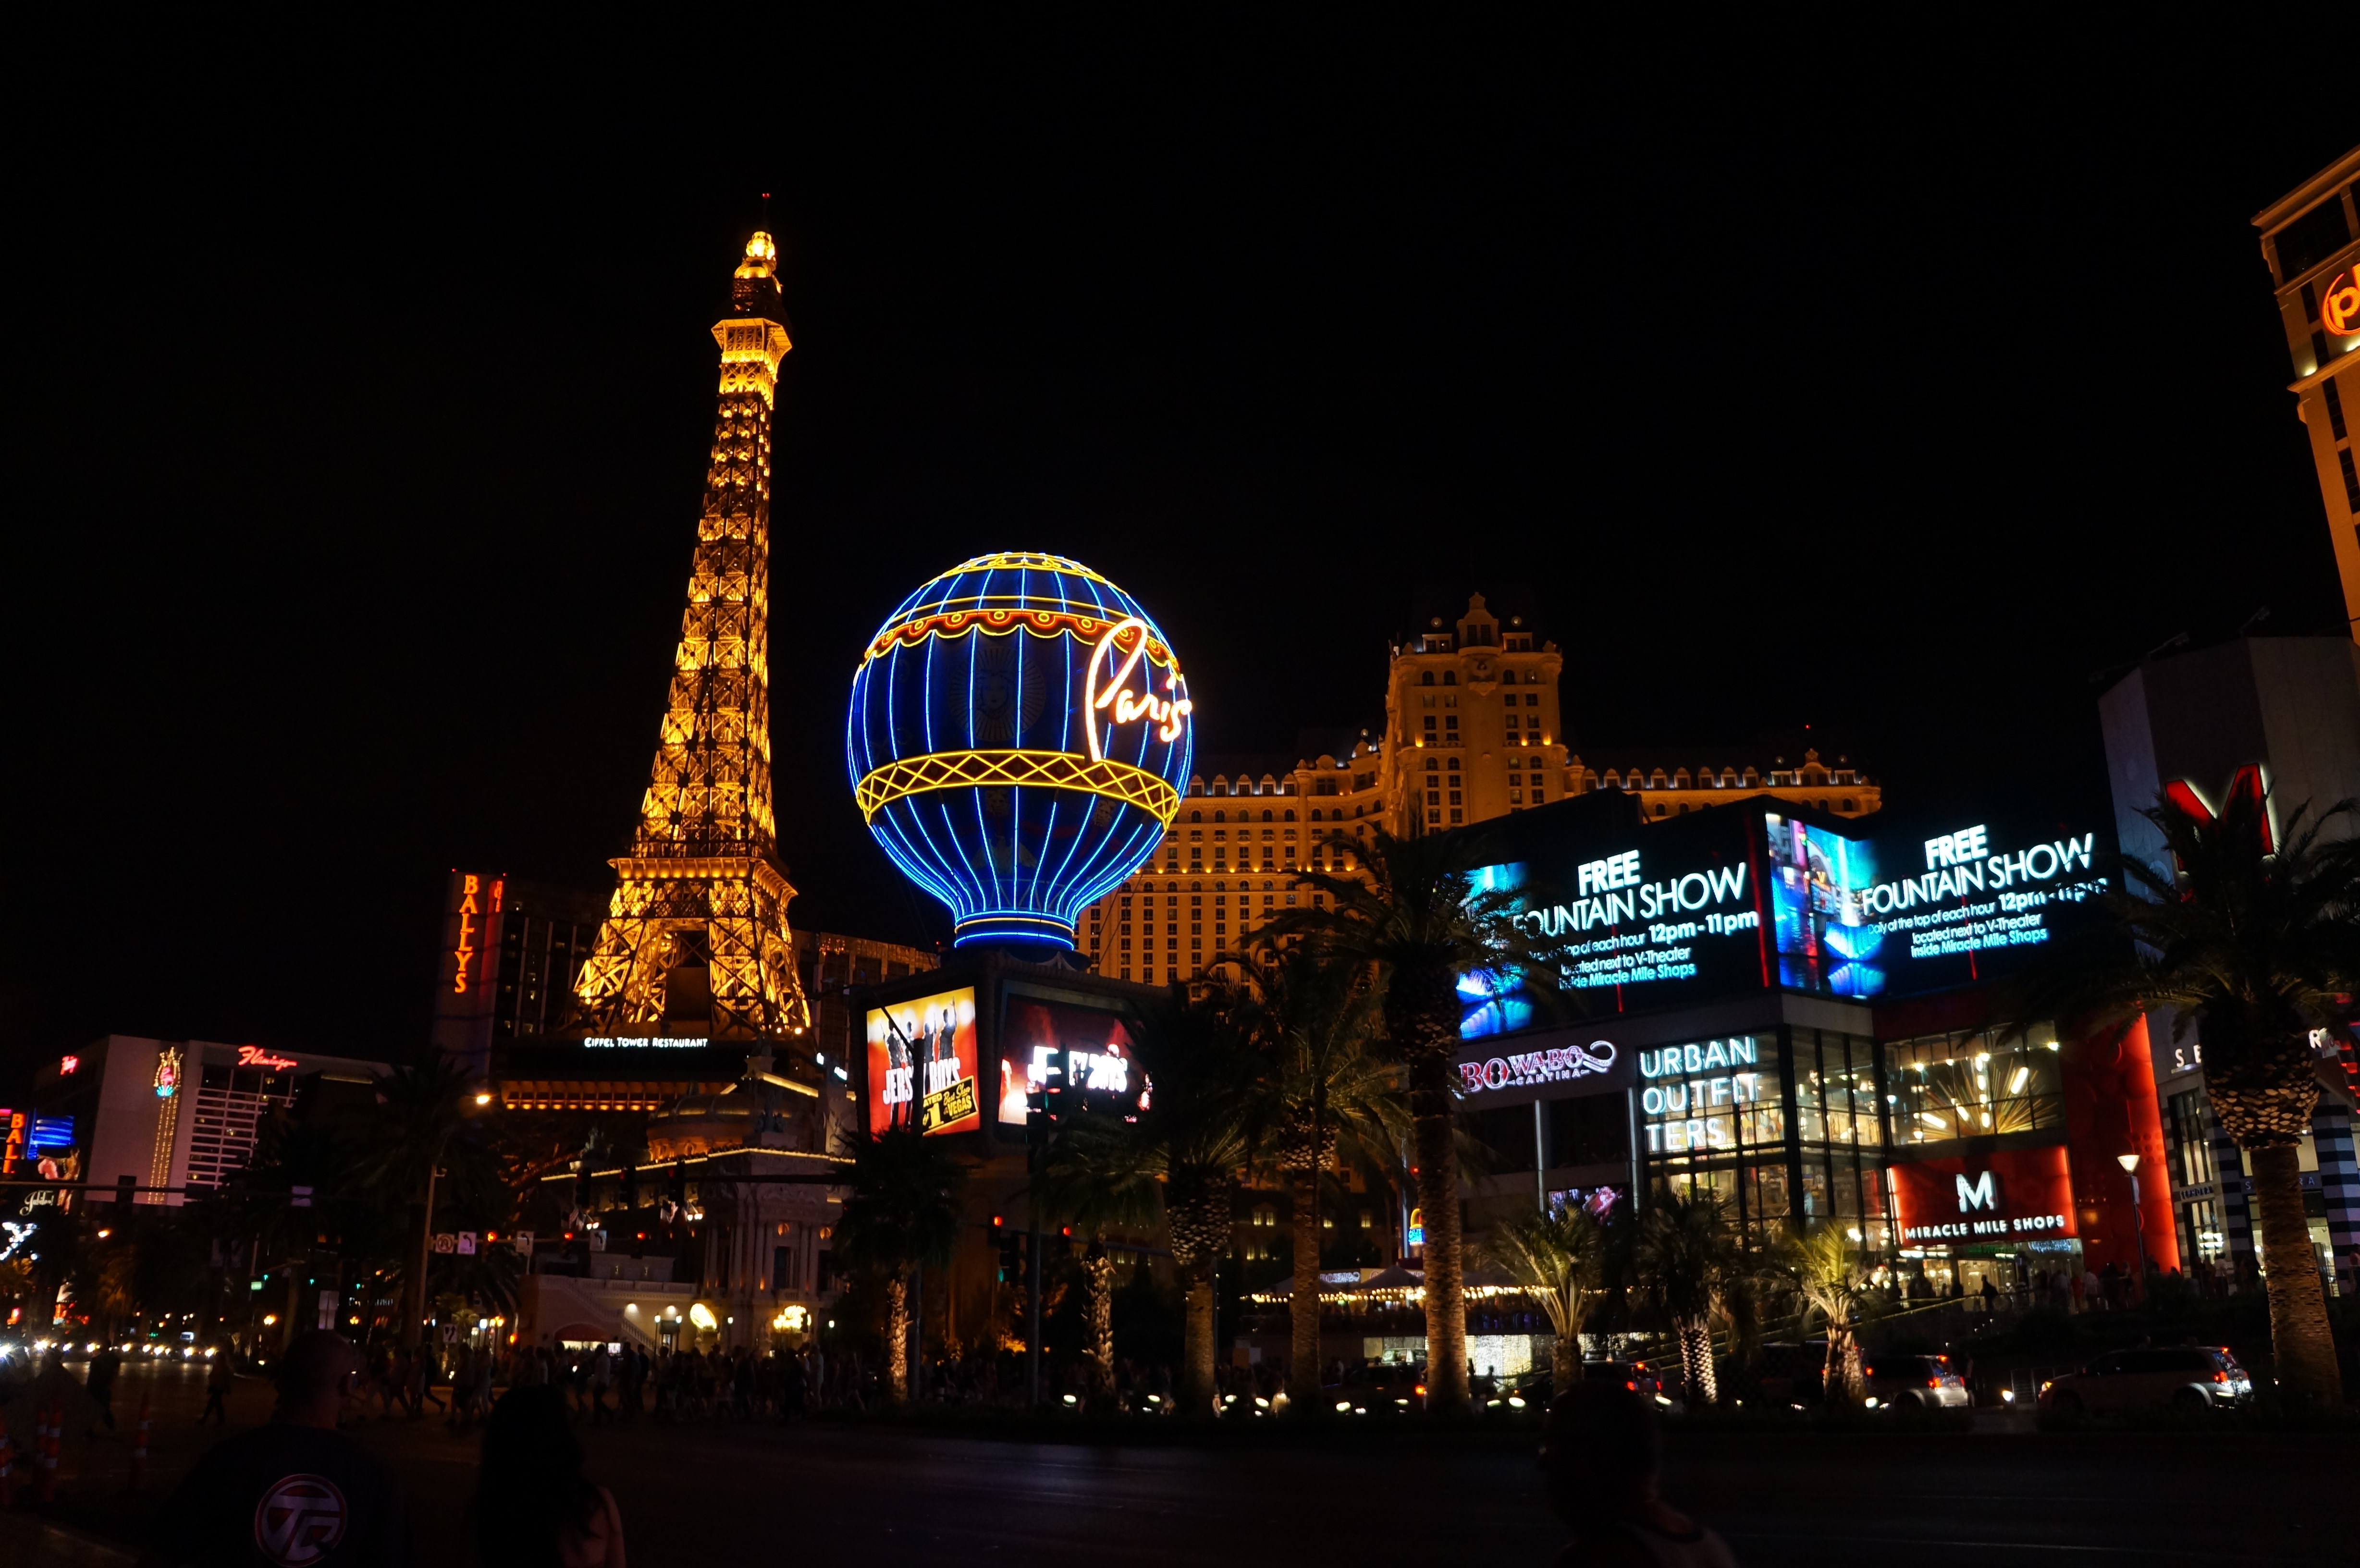 Eiffel Tower Restaurant at Paris: Vegas - Dreams of Velvet